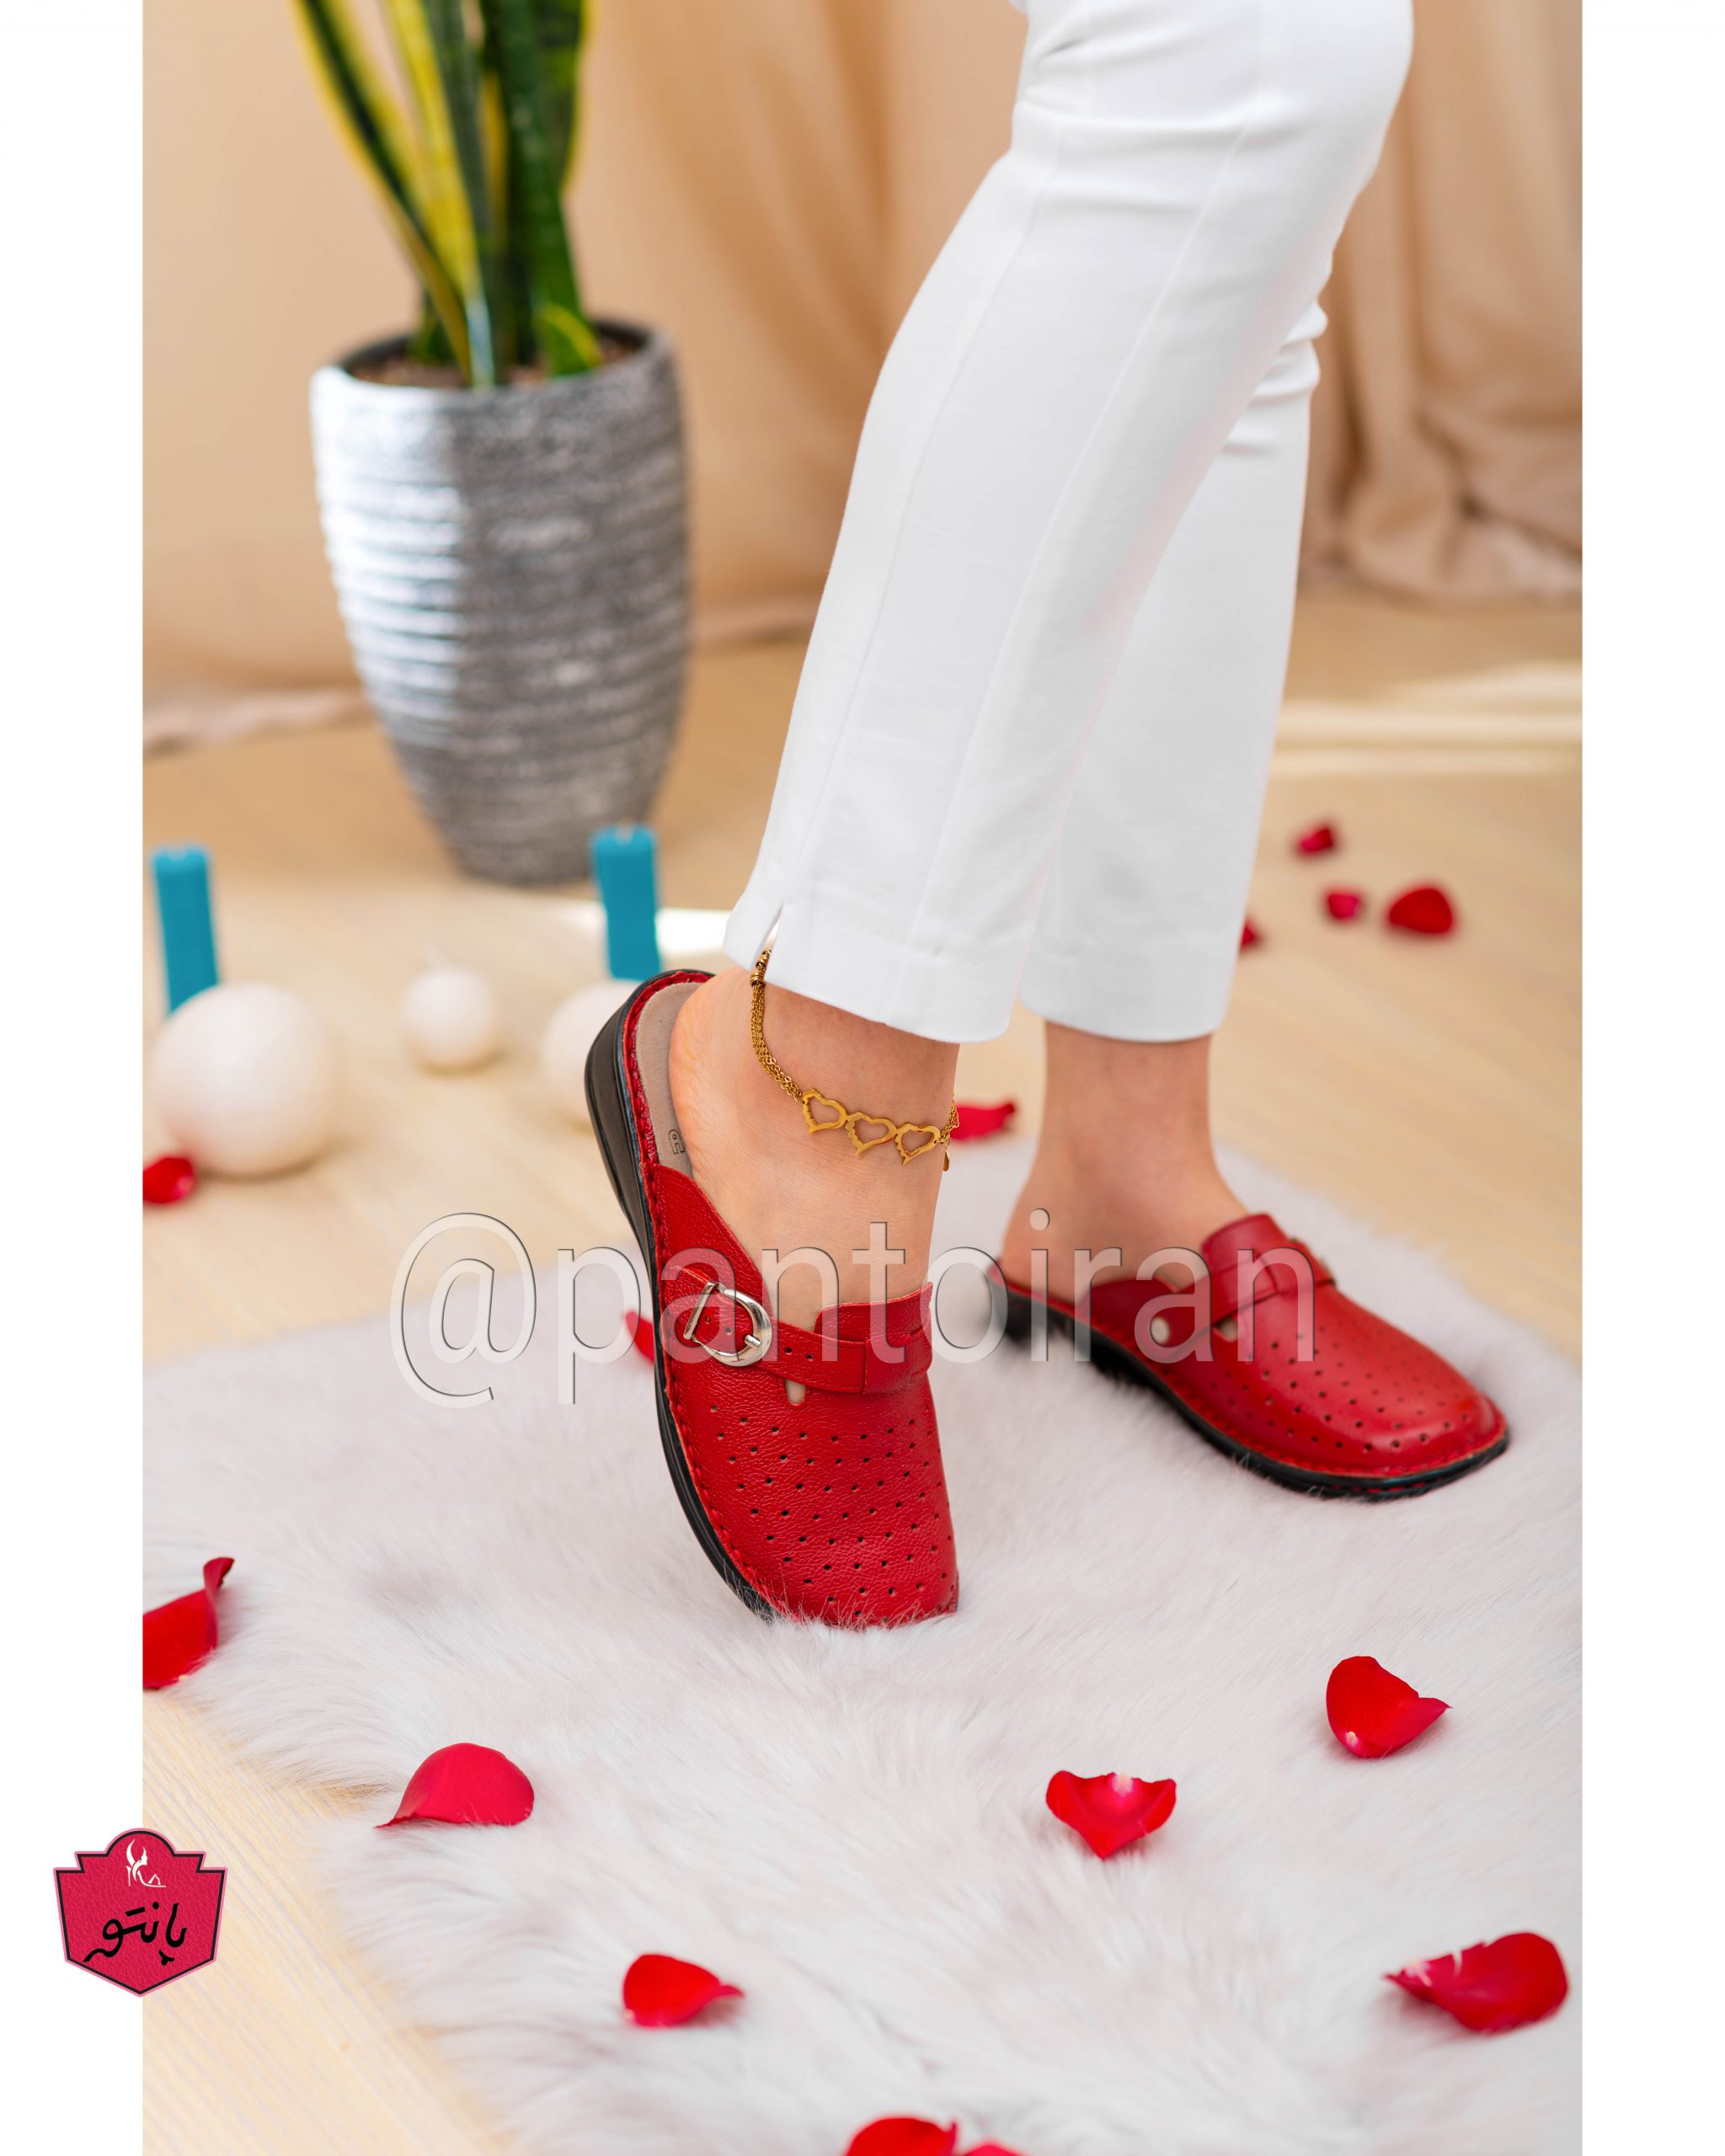 Leather slippers model: "Khatun" | Code 1000204